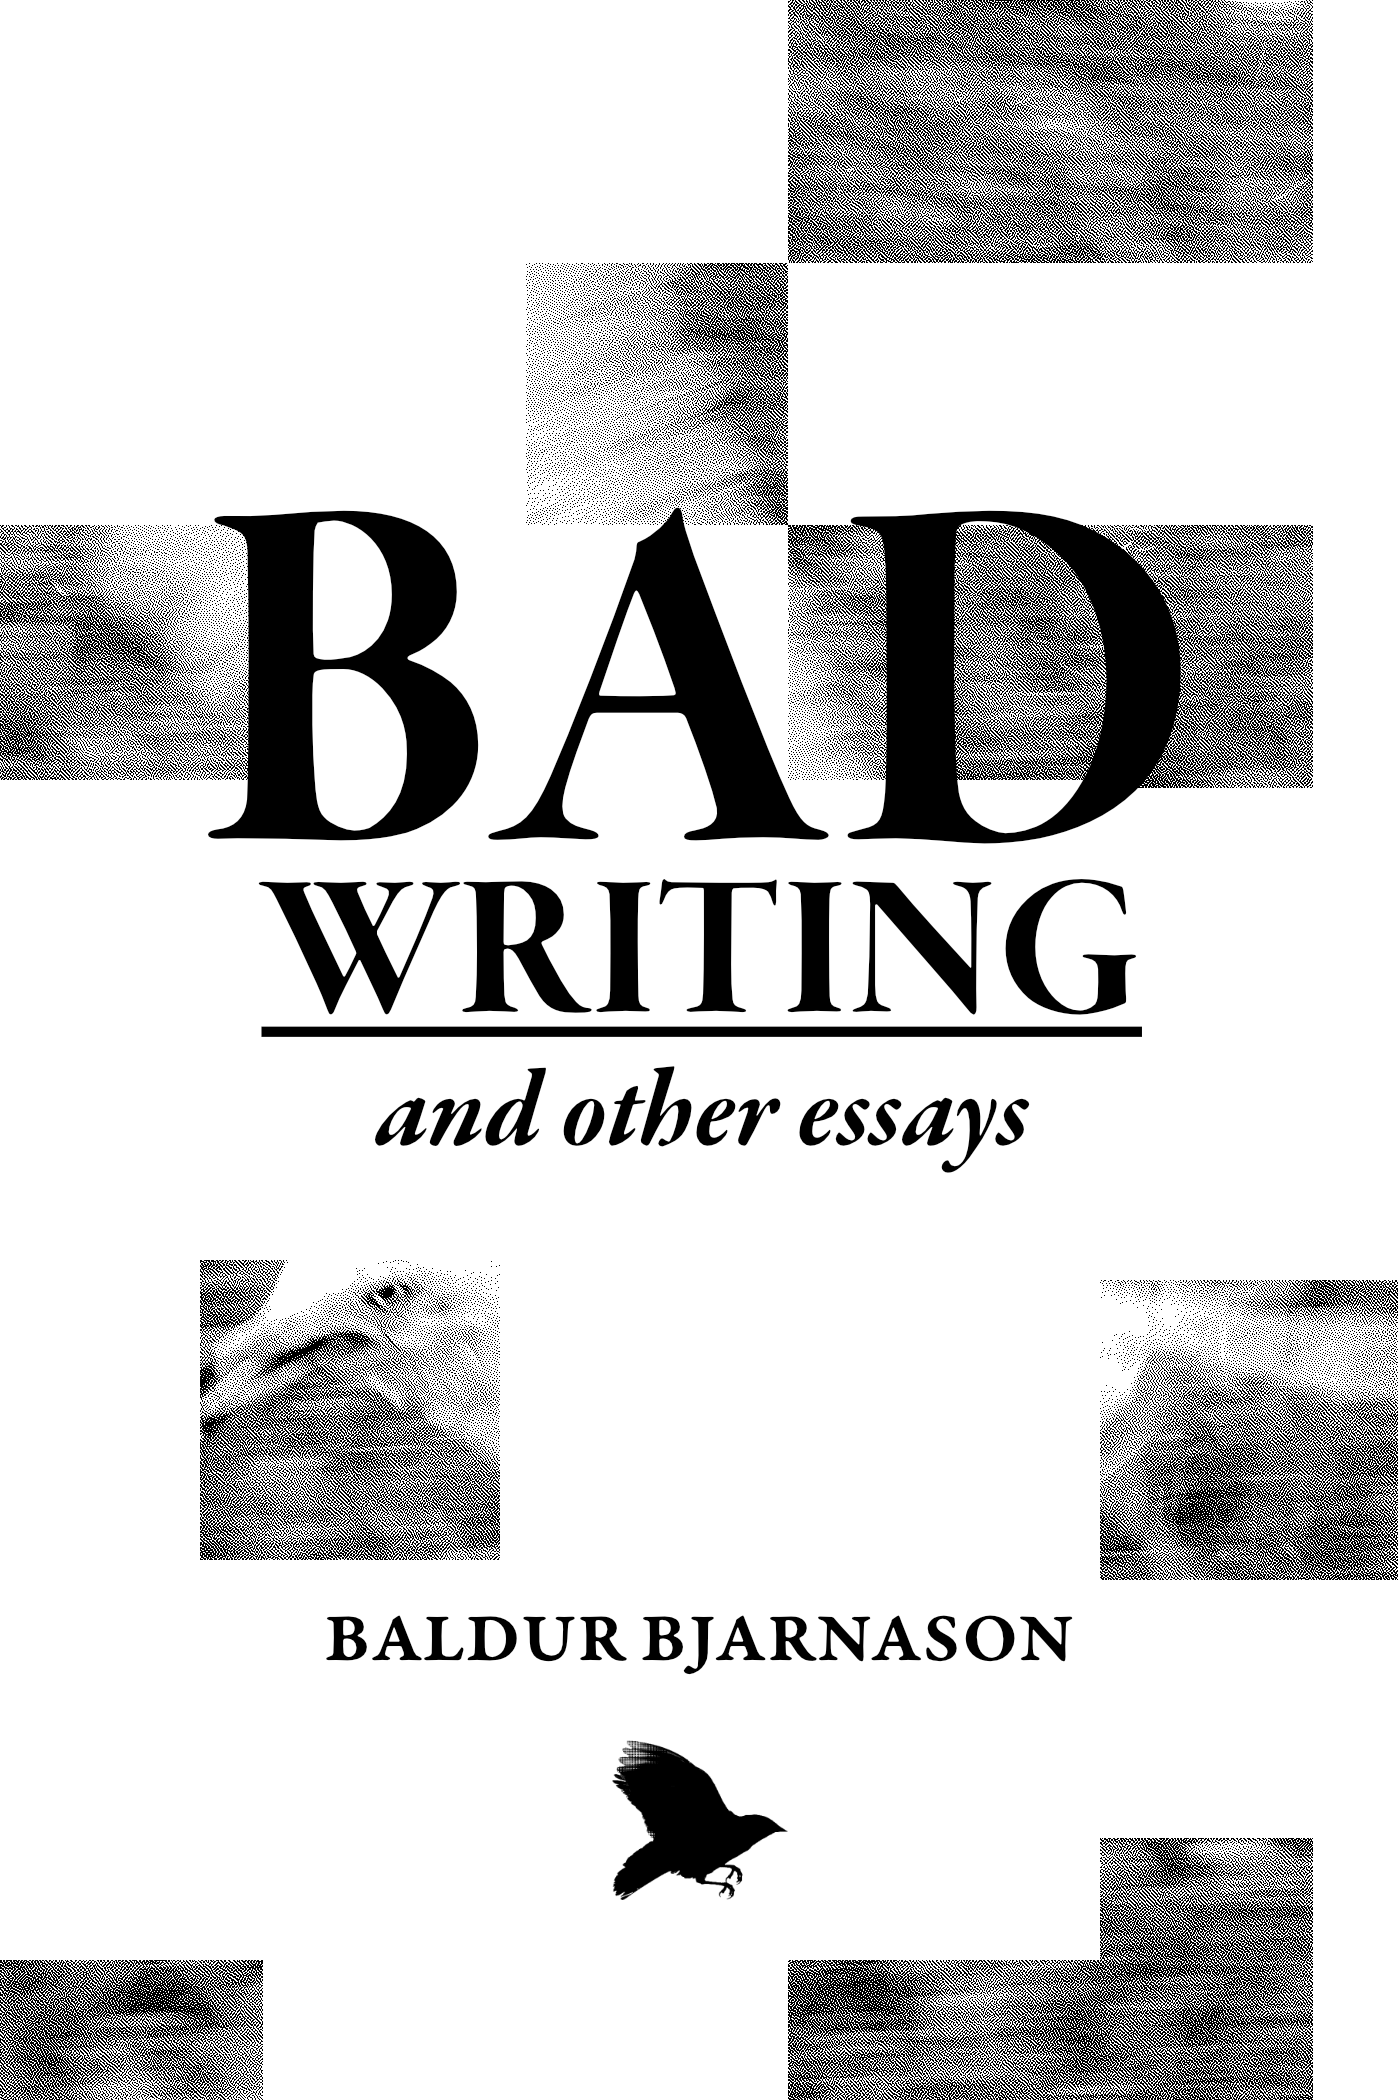 Bad Writing and Other Essays by Baldur Bjarnason